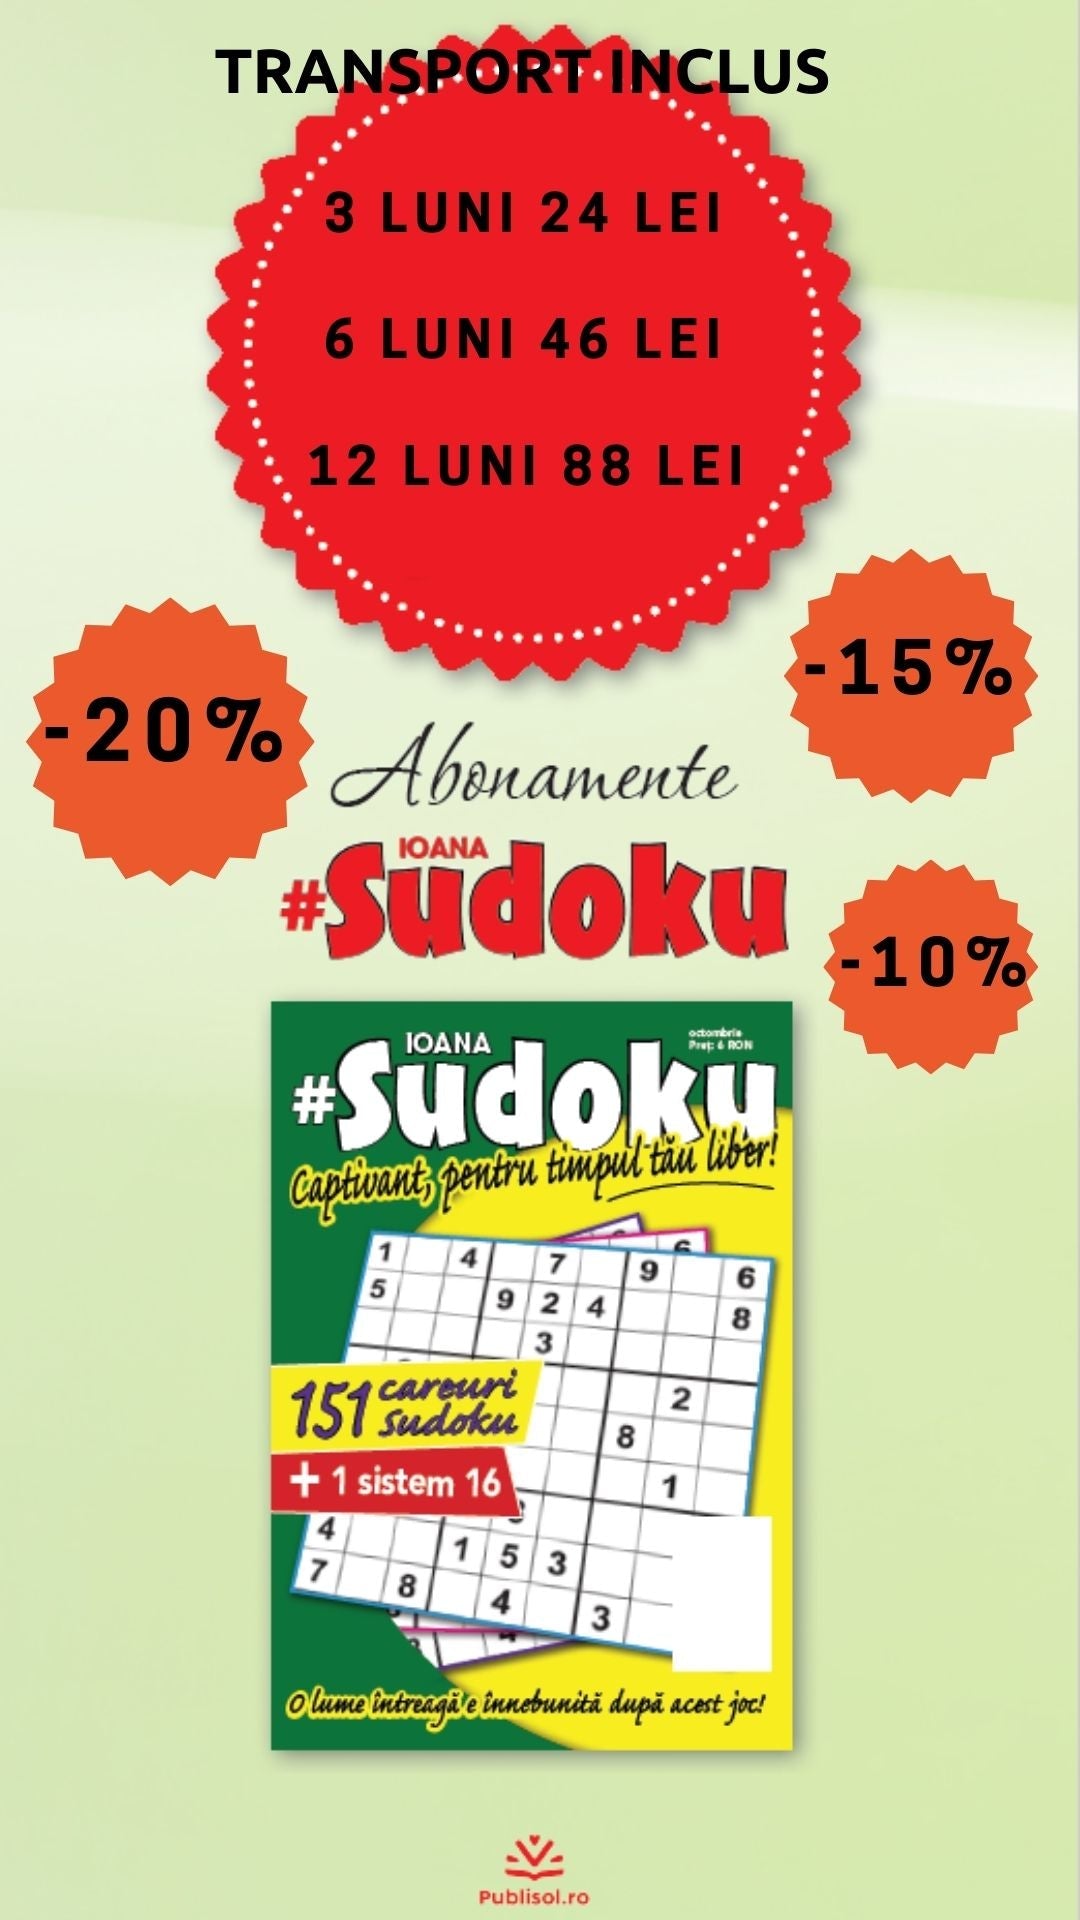 #Ioana sudoku - Abonament - Publisol.ro